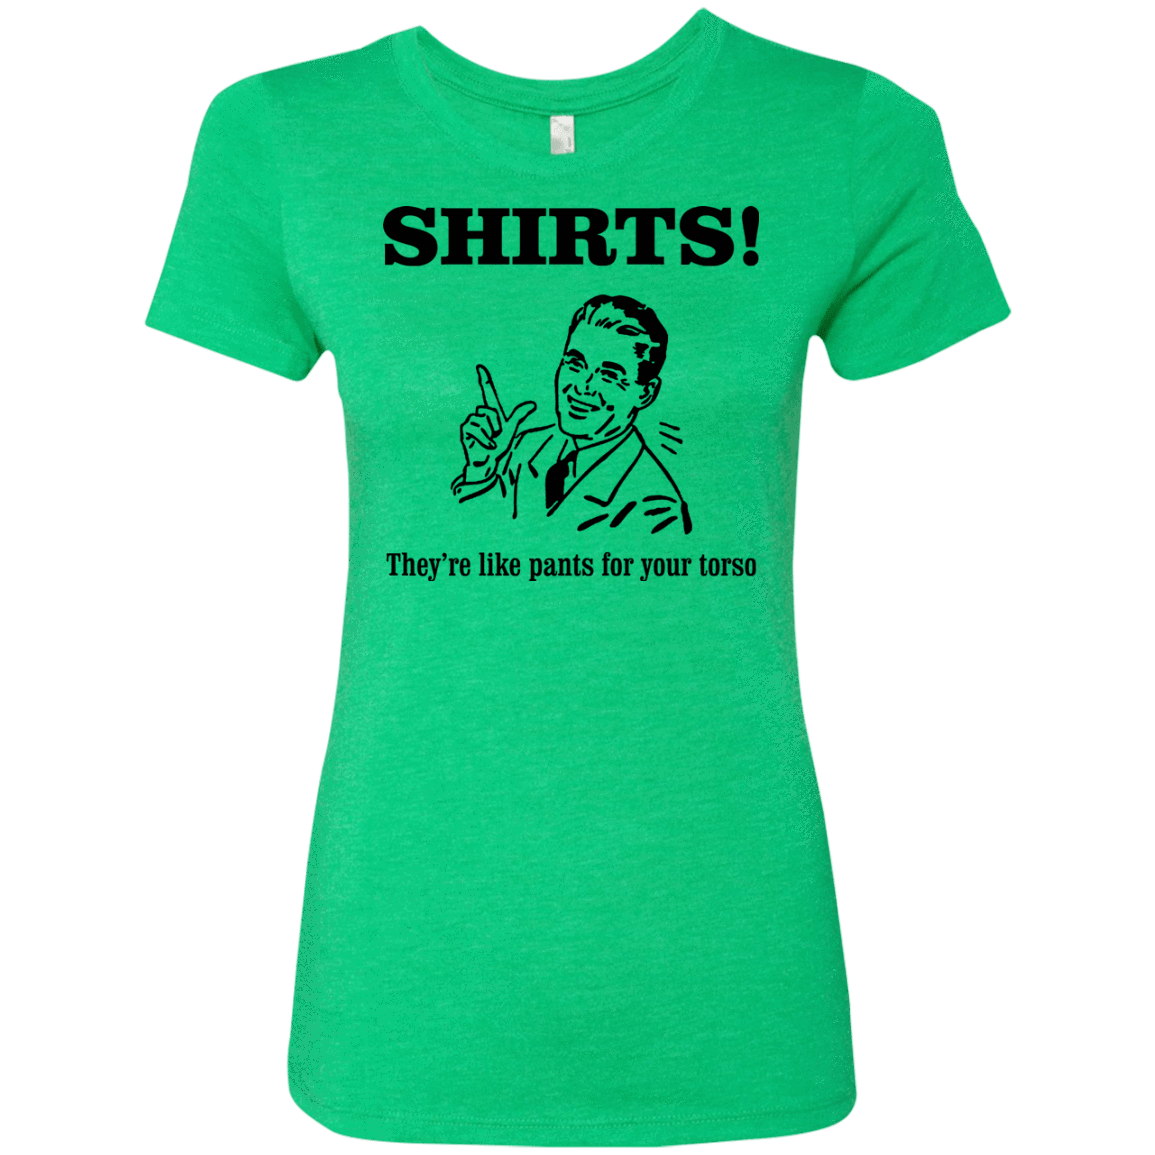 T-Shirts Envy / Small Shirts like pants Women's Triblend T-Shirt